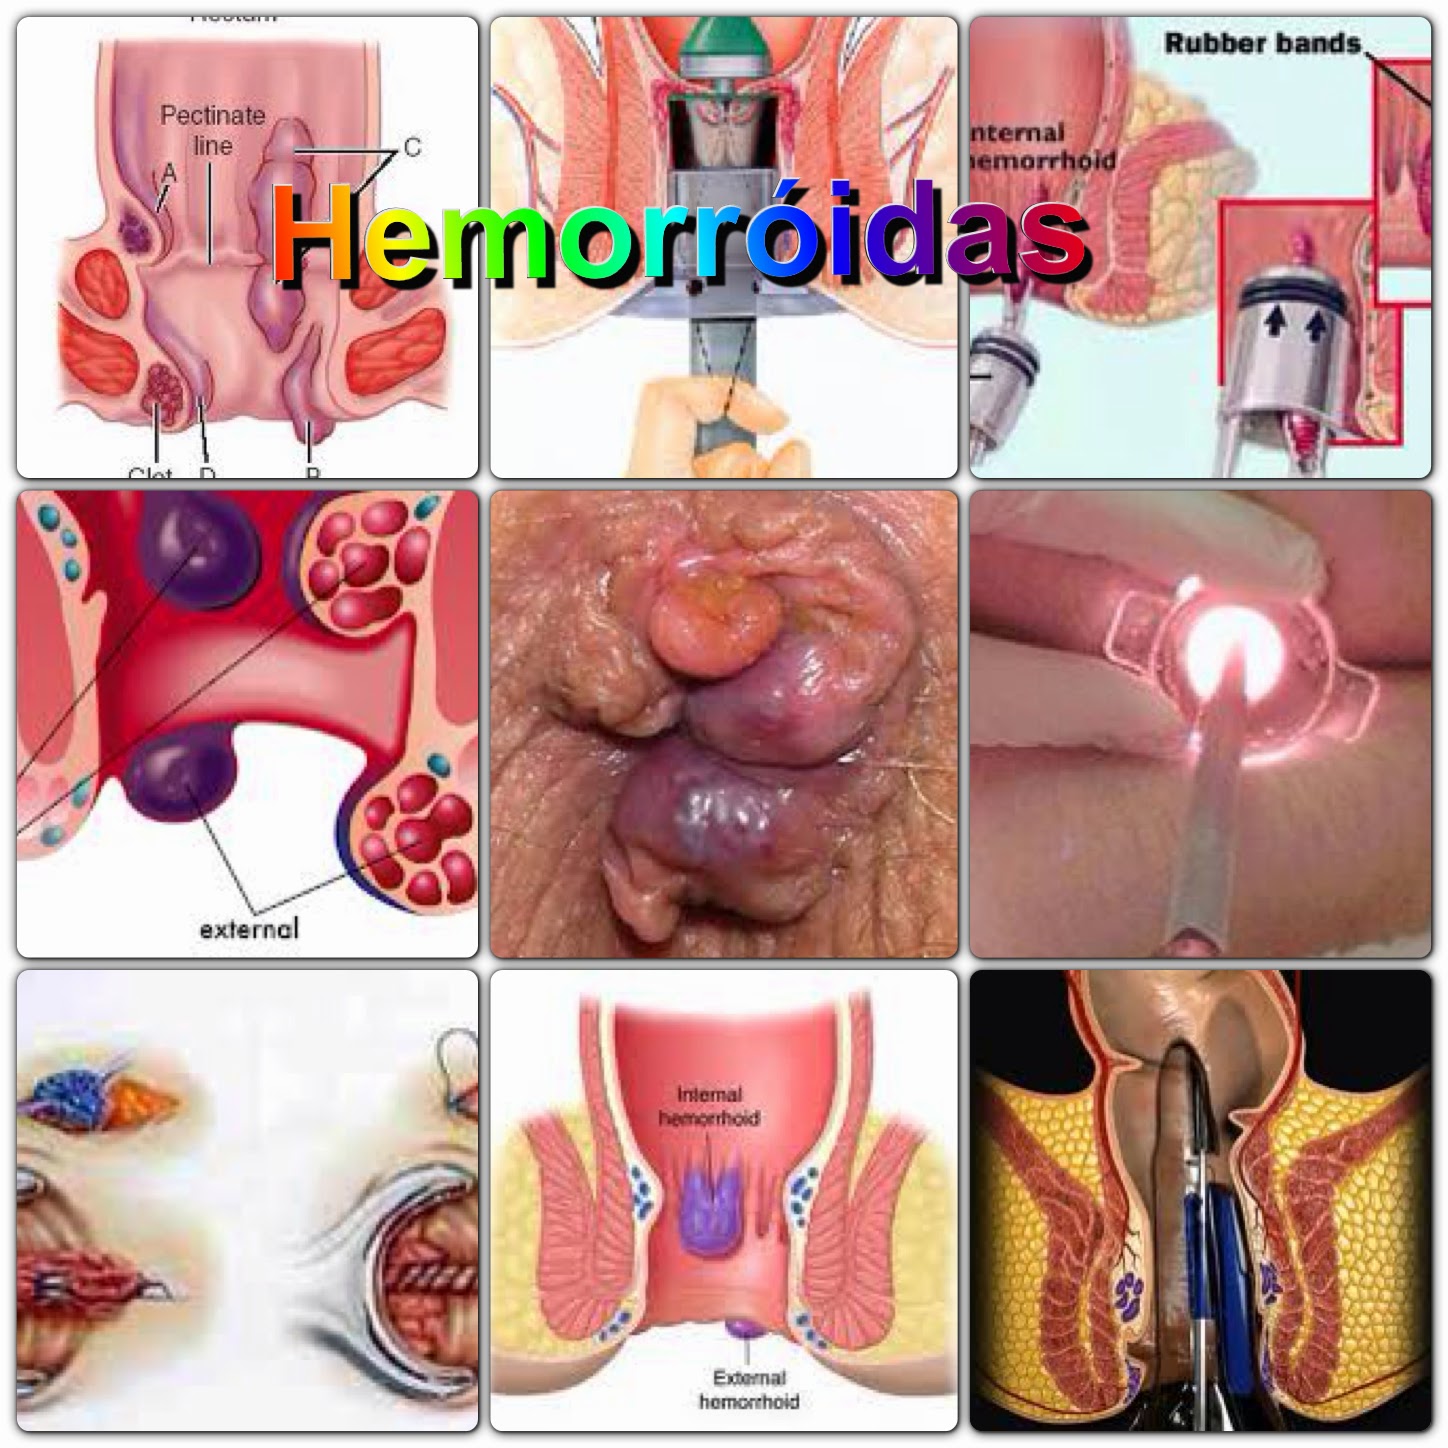 hemorroidas-1.jpg